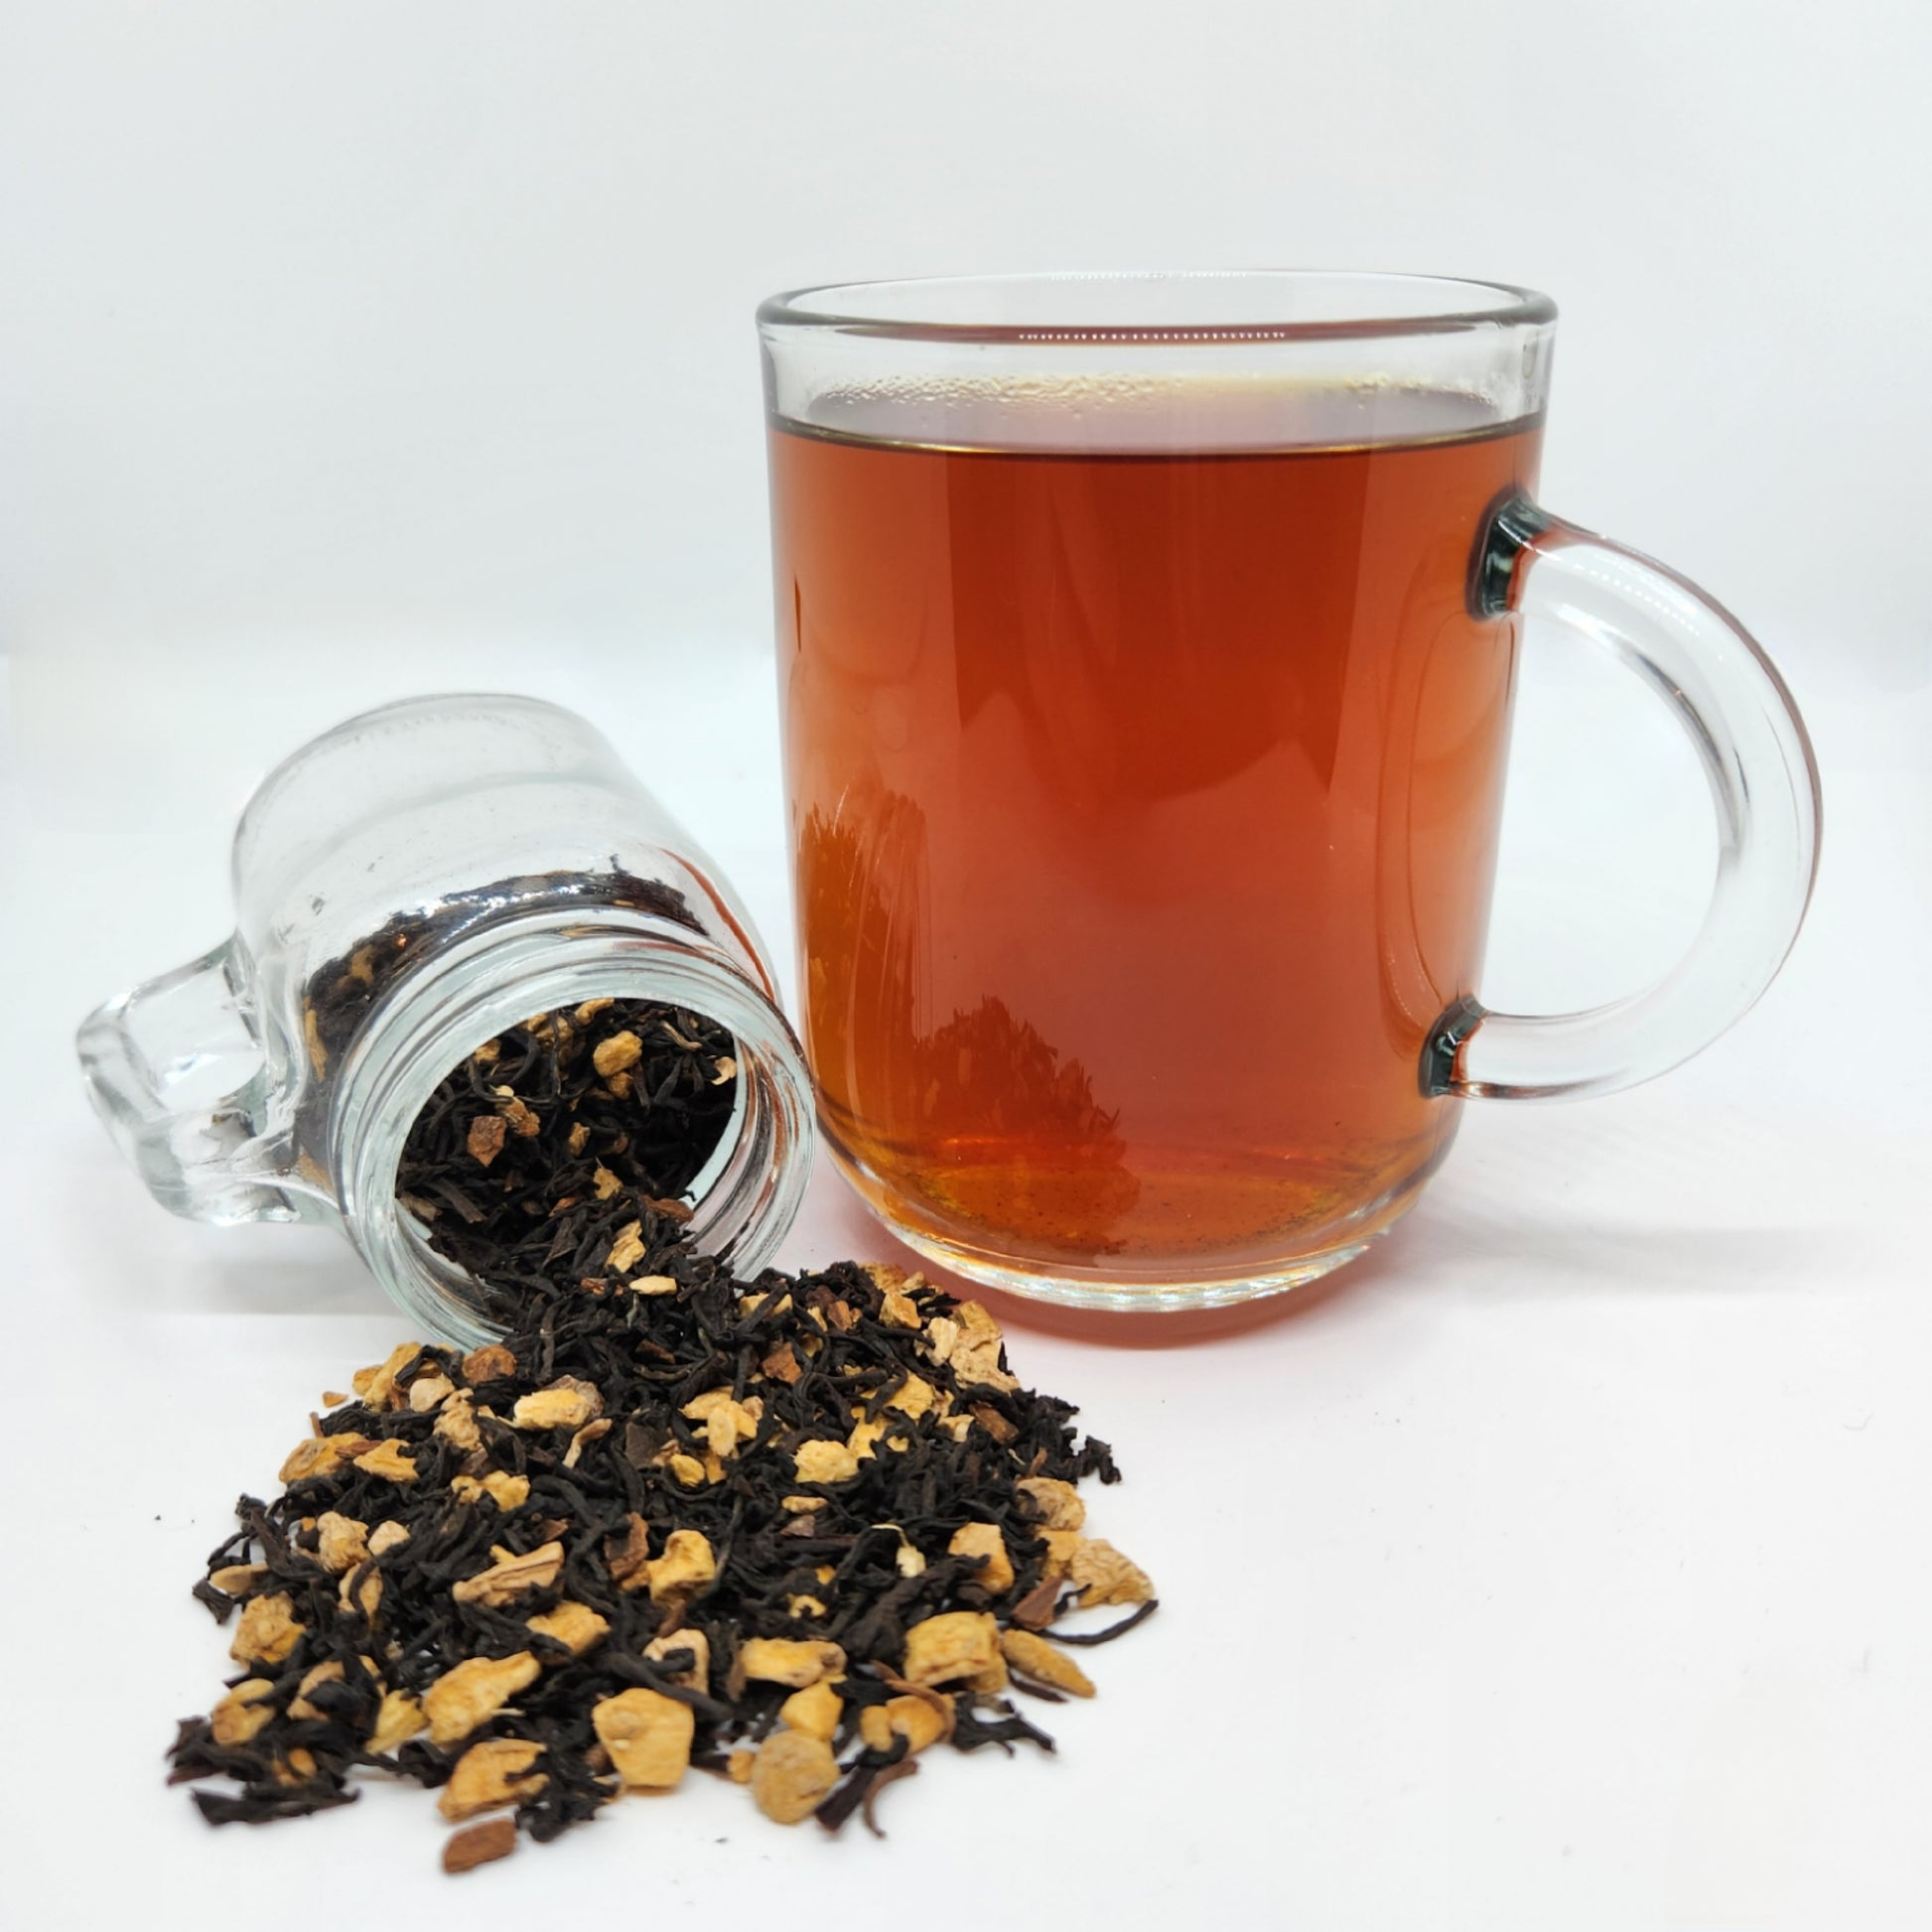 Berty's Brews - Loose leaf chai tea